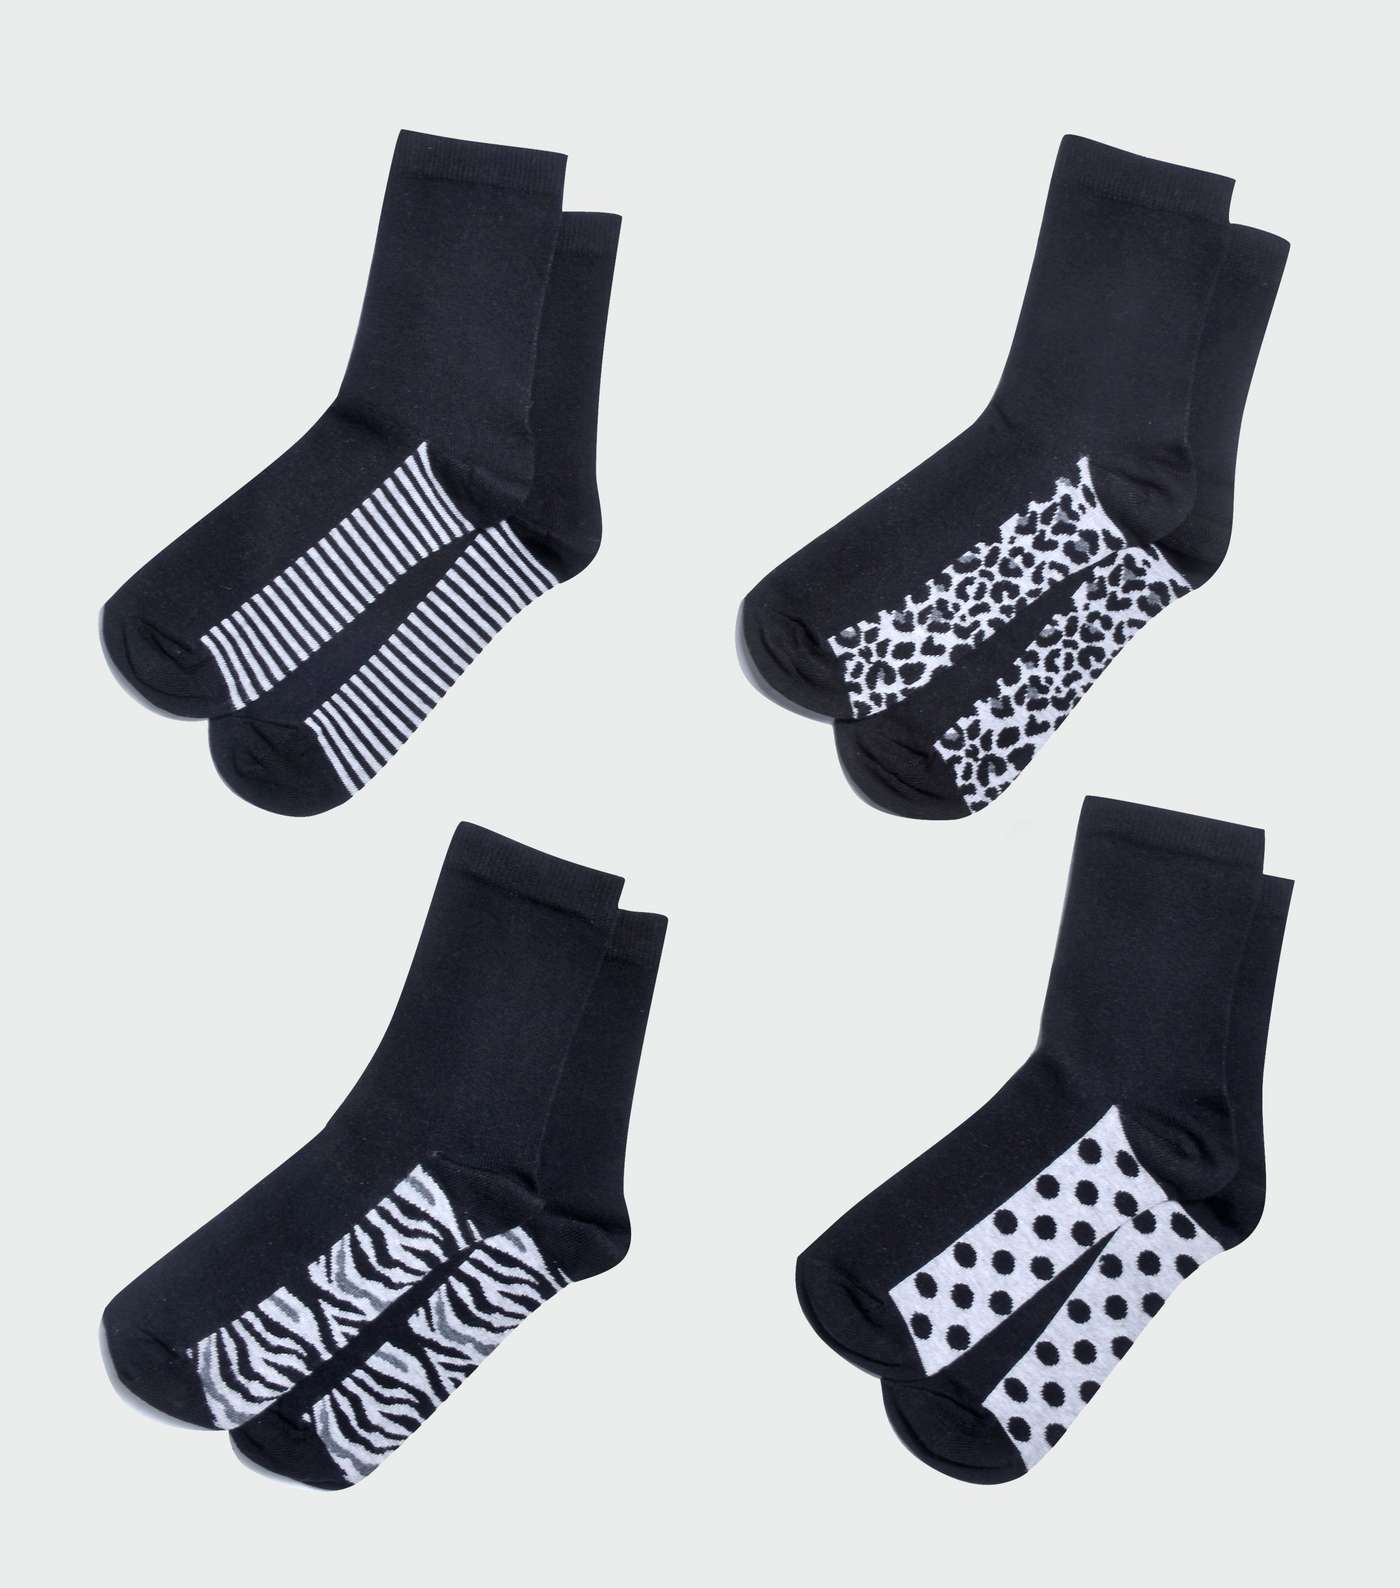 4 Pack Black Mixed Animal Socks 